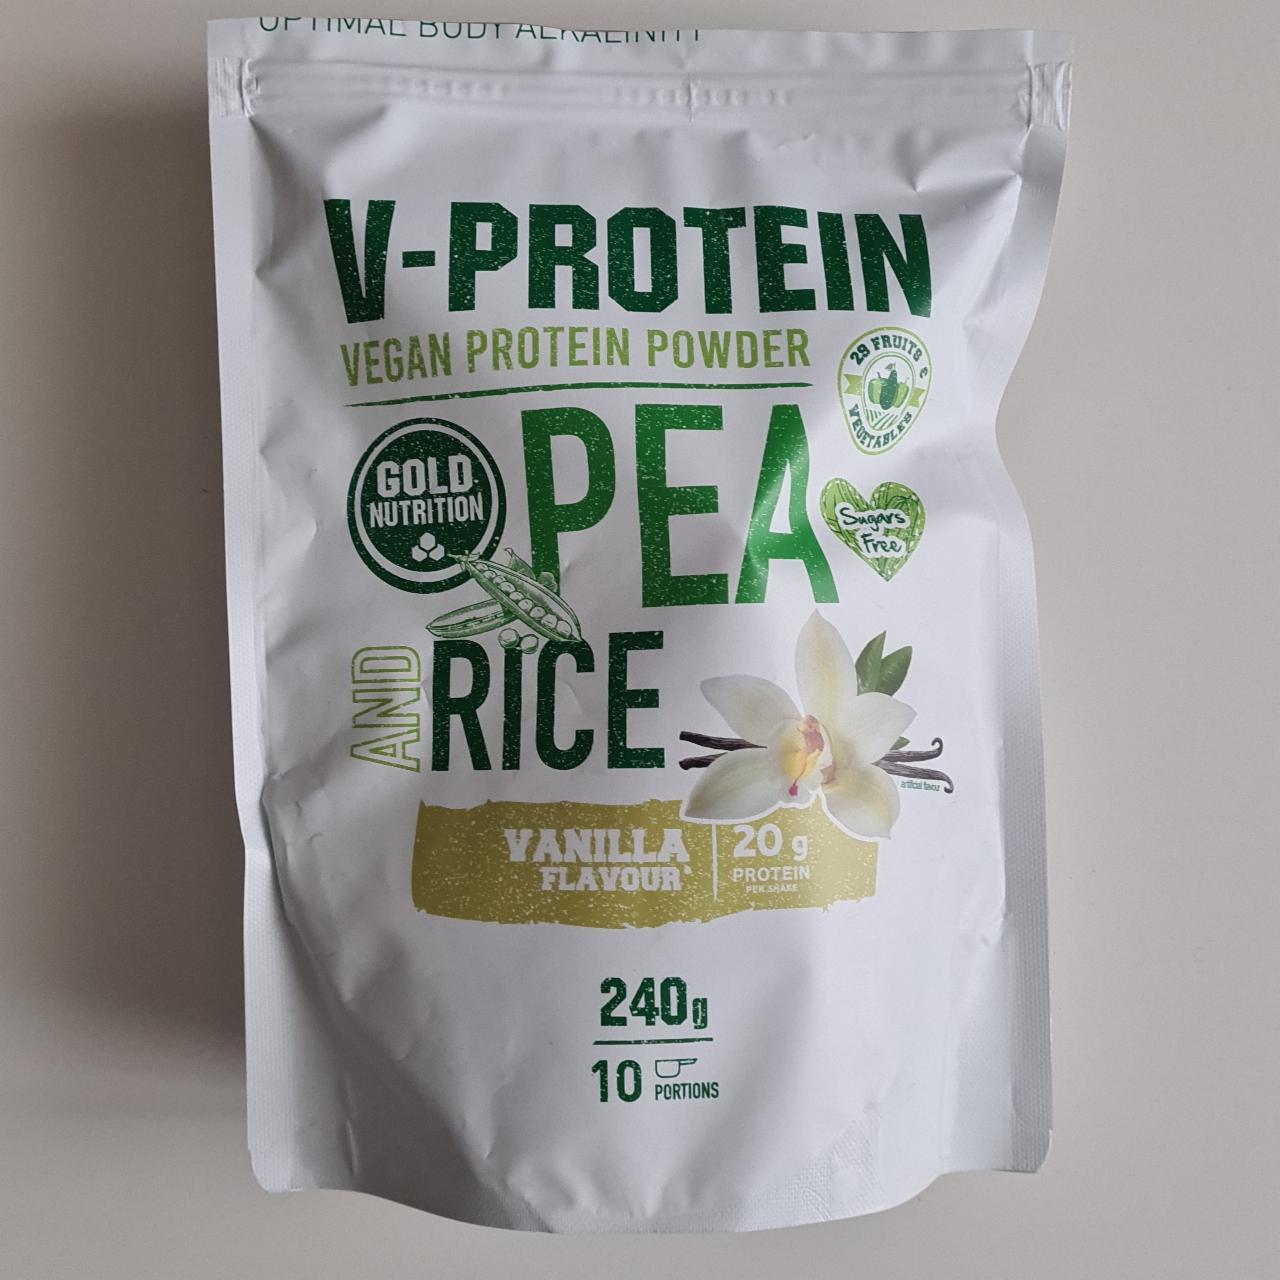 Fotografie - Vegan protein powder Pea and Rice Vanilla flavour V Protein